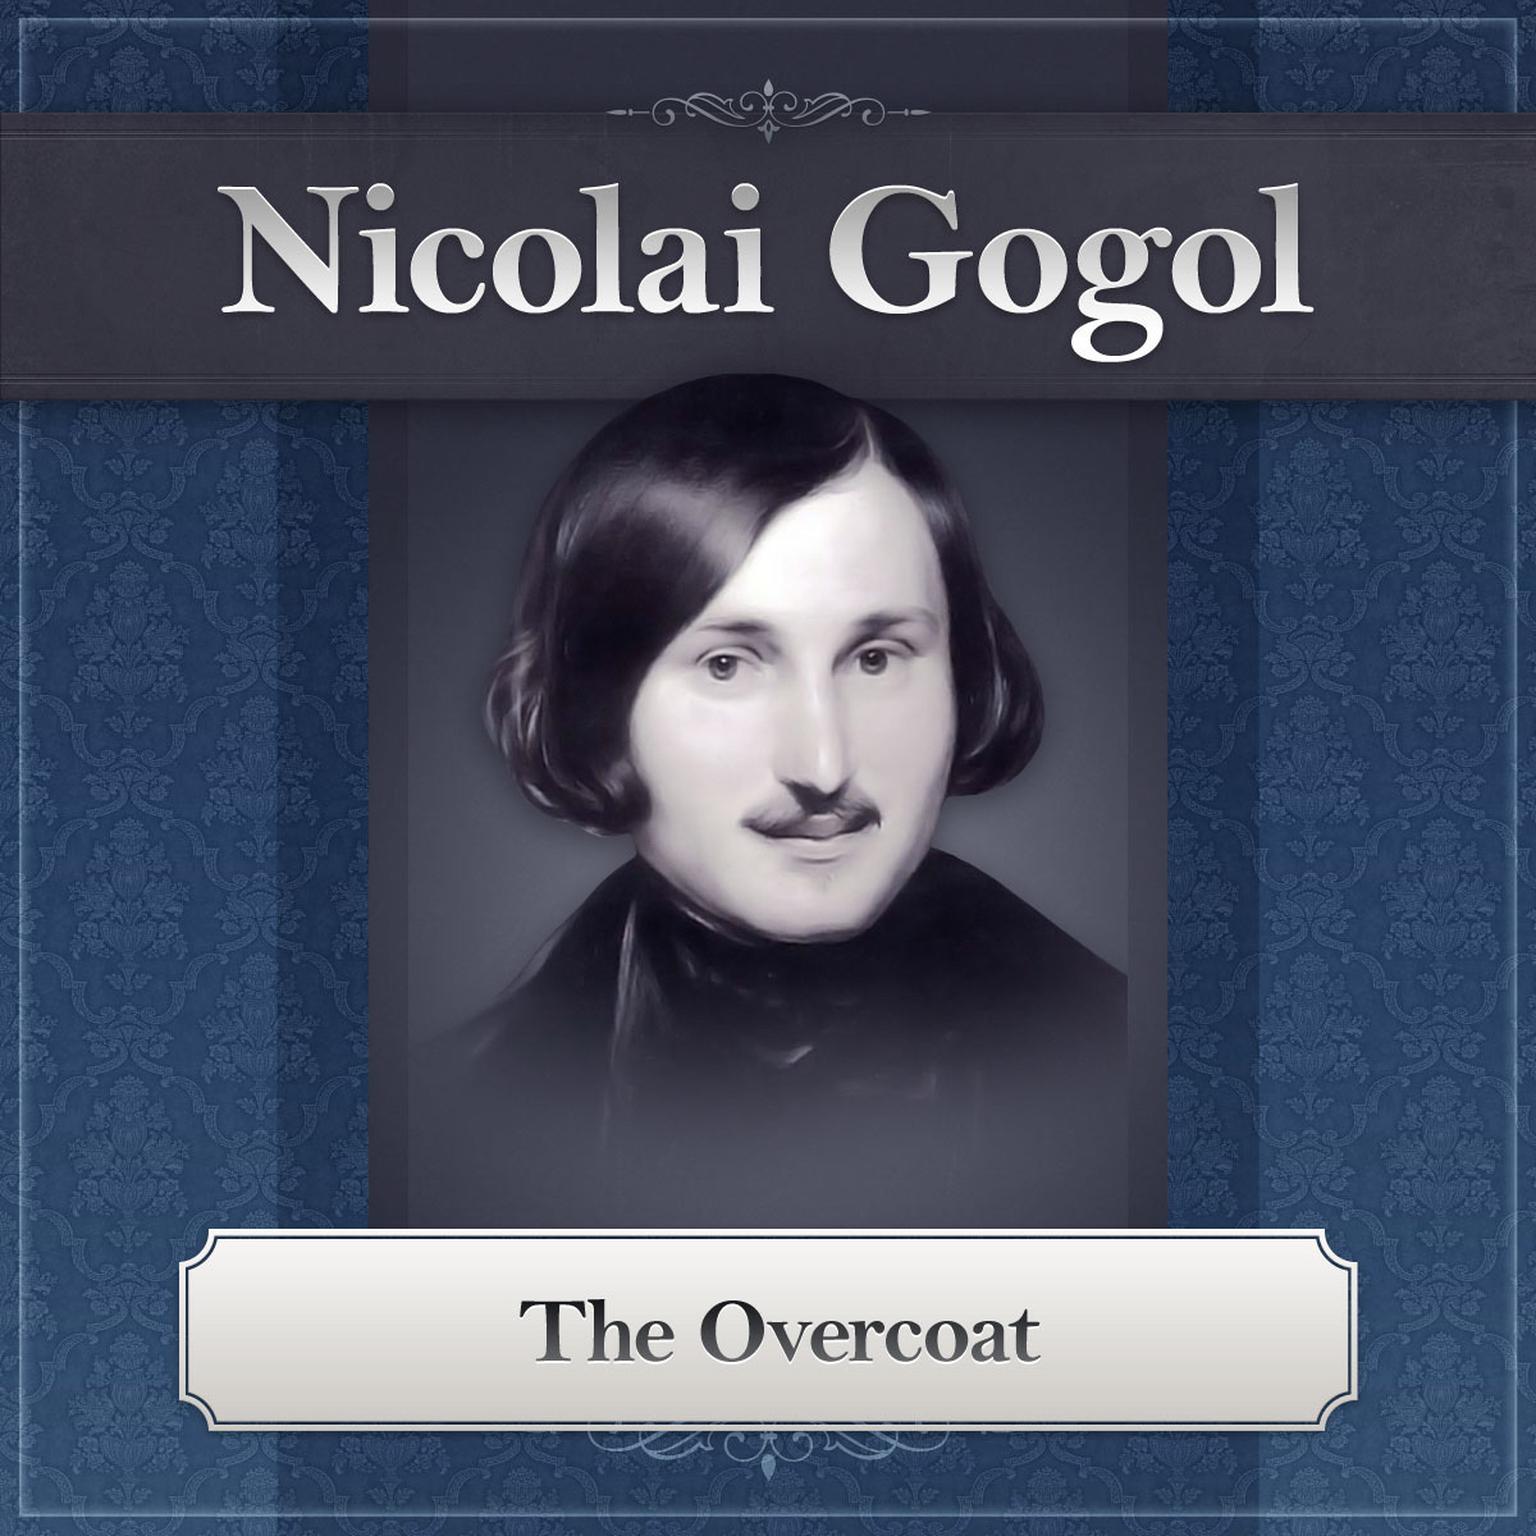 The Overcoat: A Nikolai Gogol Story Audiobook, by Nikolai Vasilievich Gogol